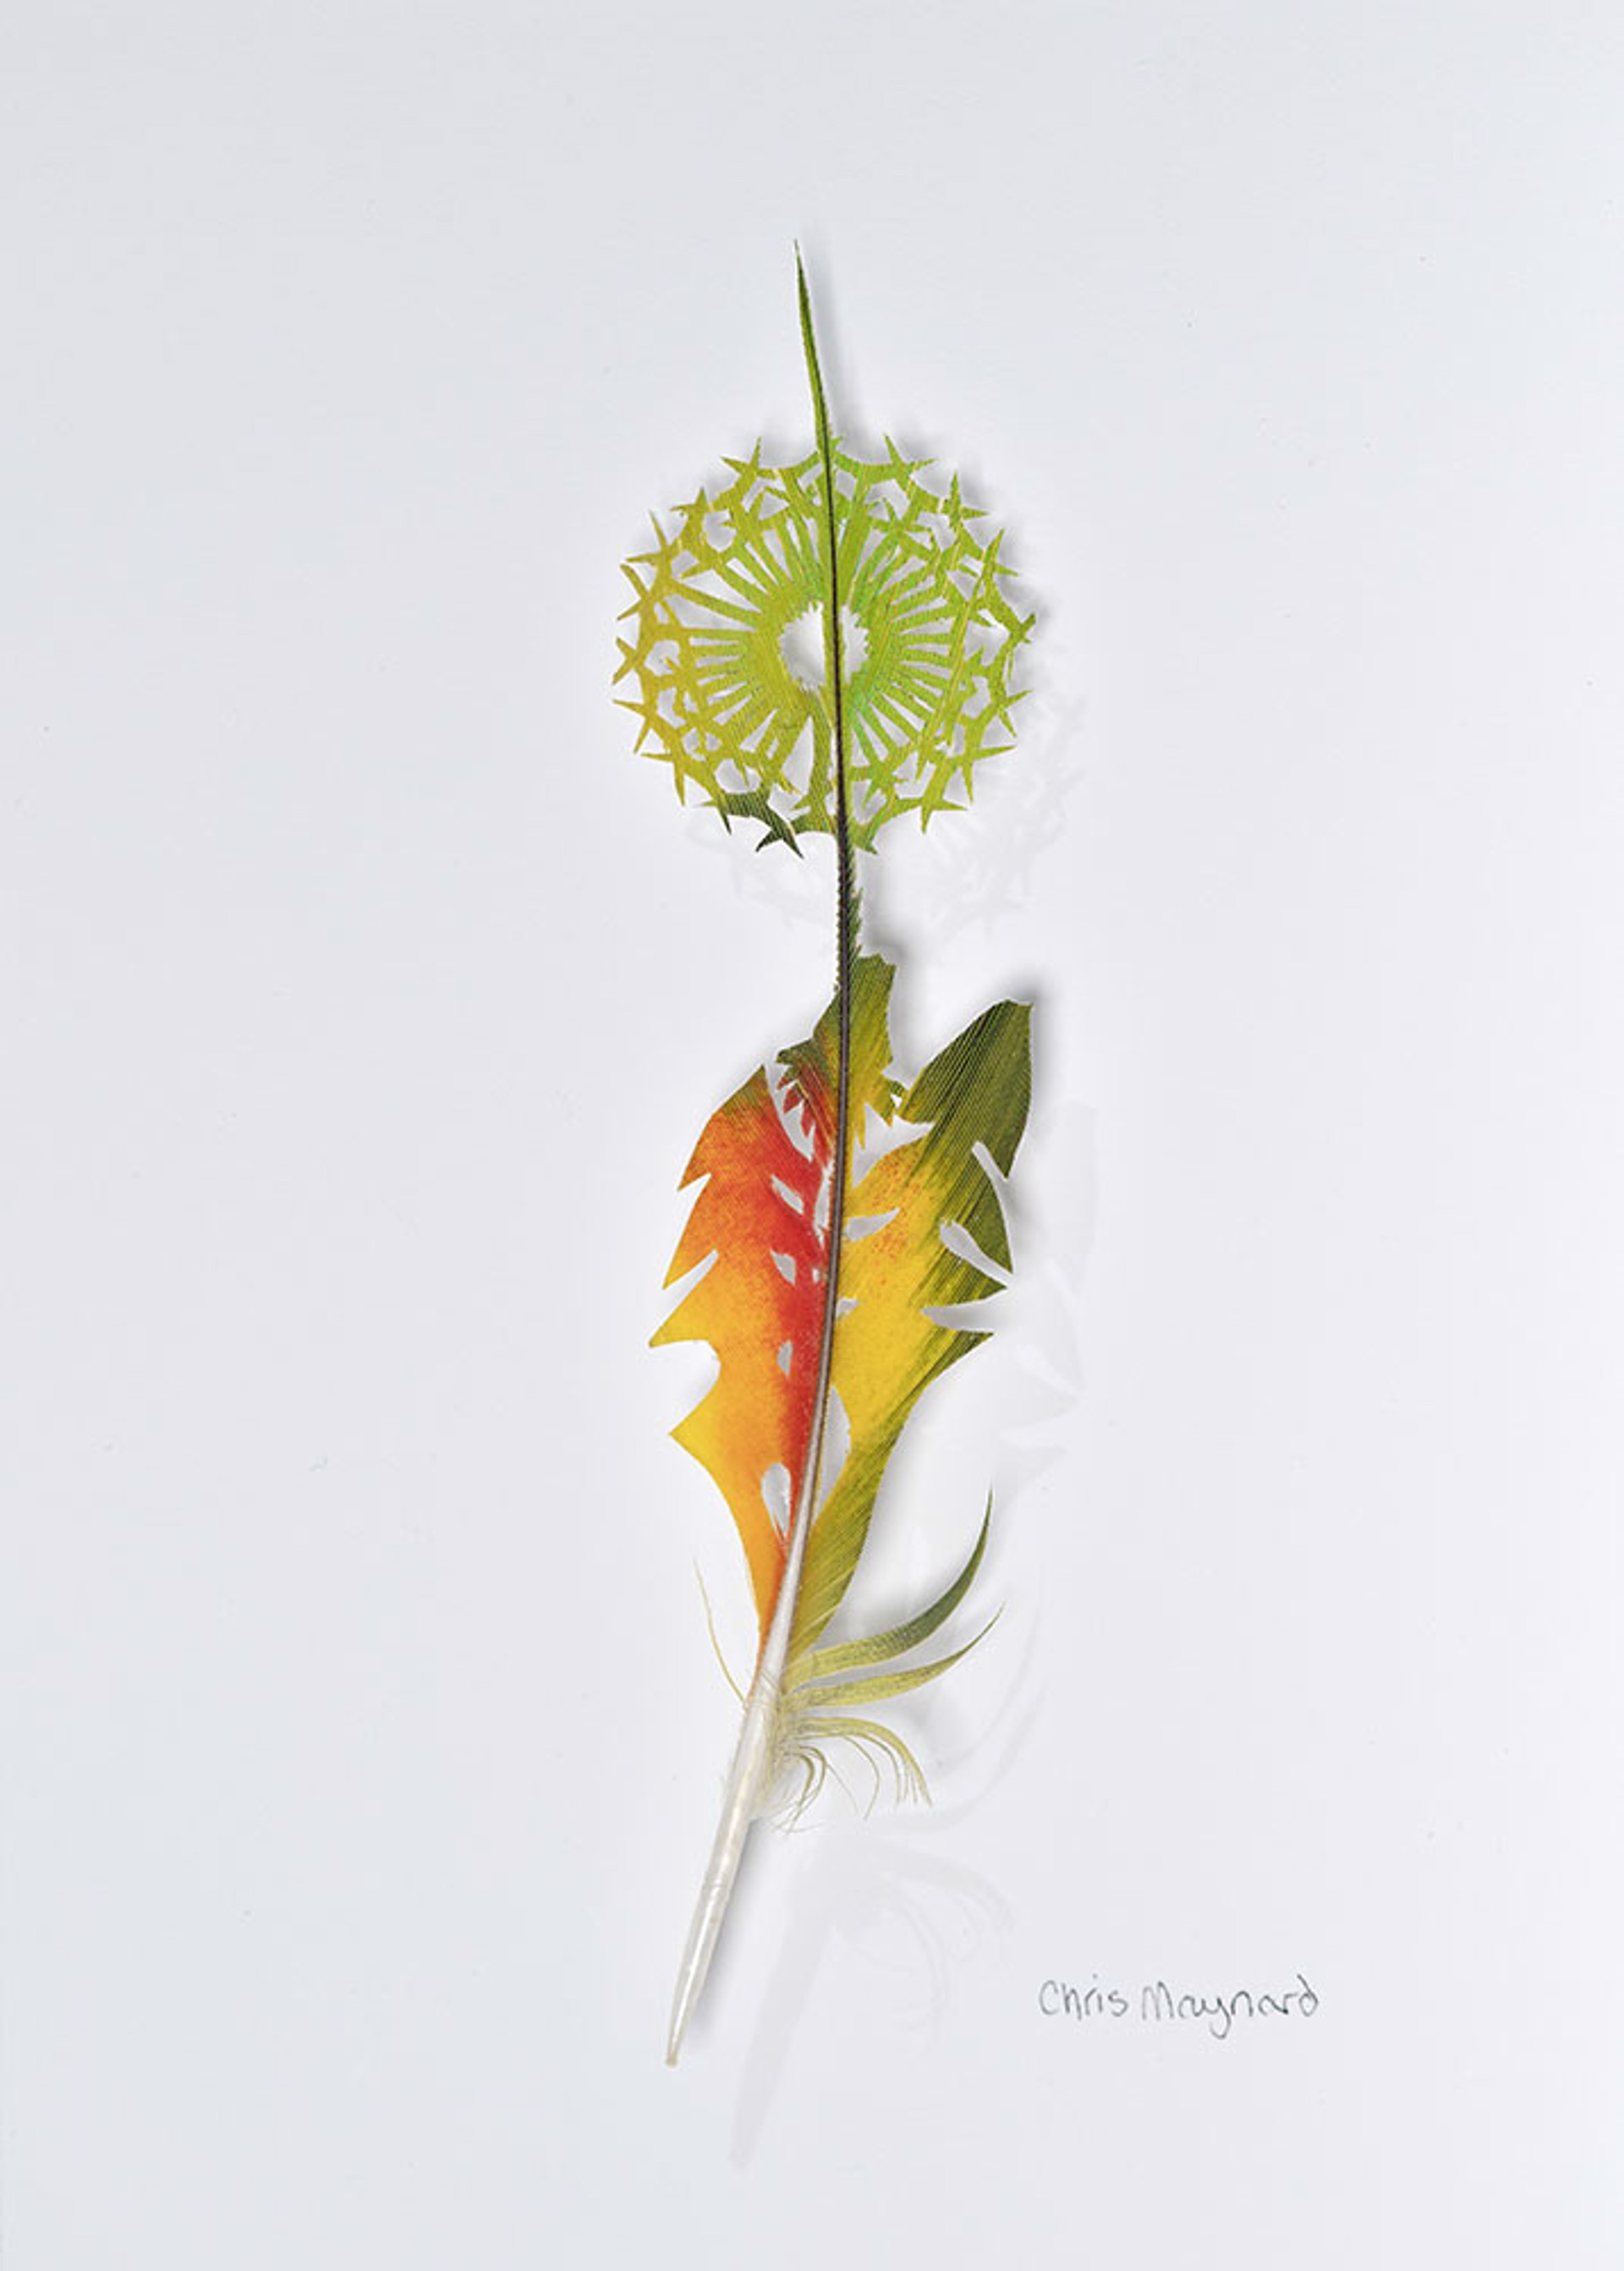 Dandelion Fluff by Chris Maynard